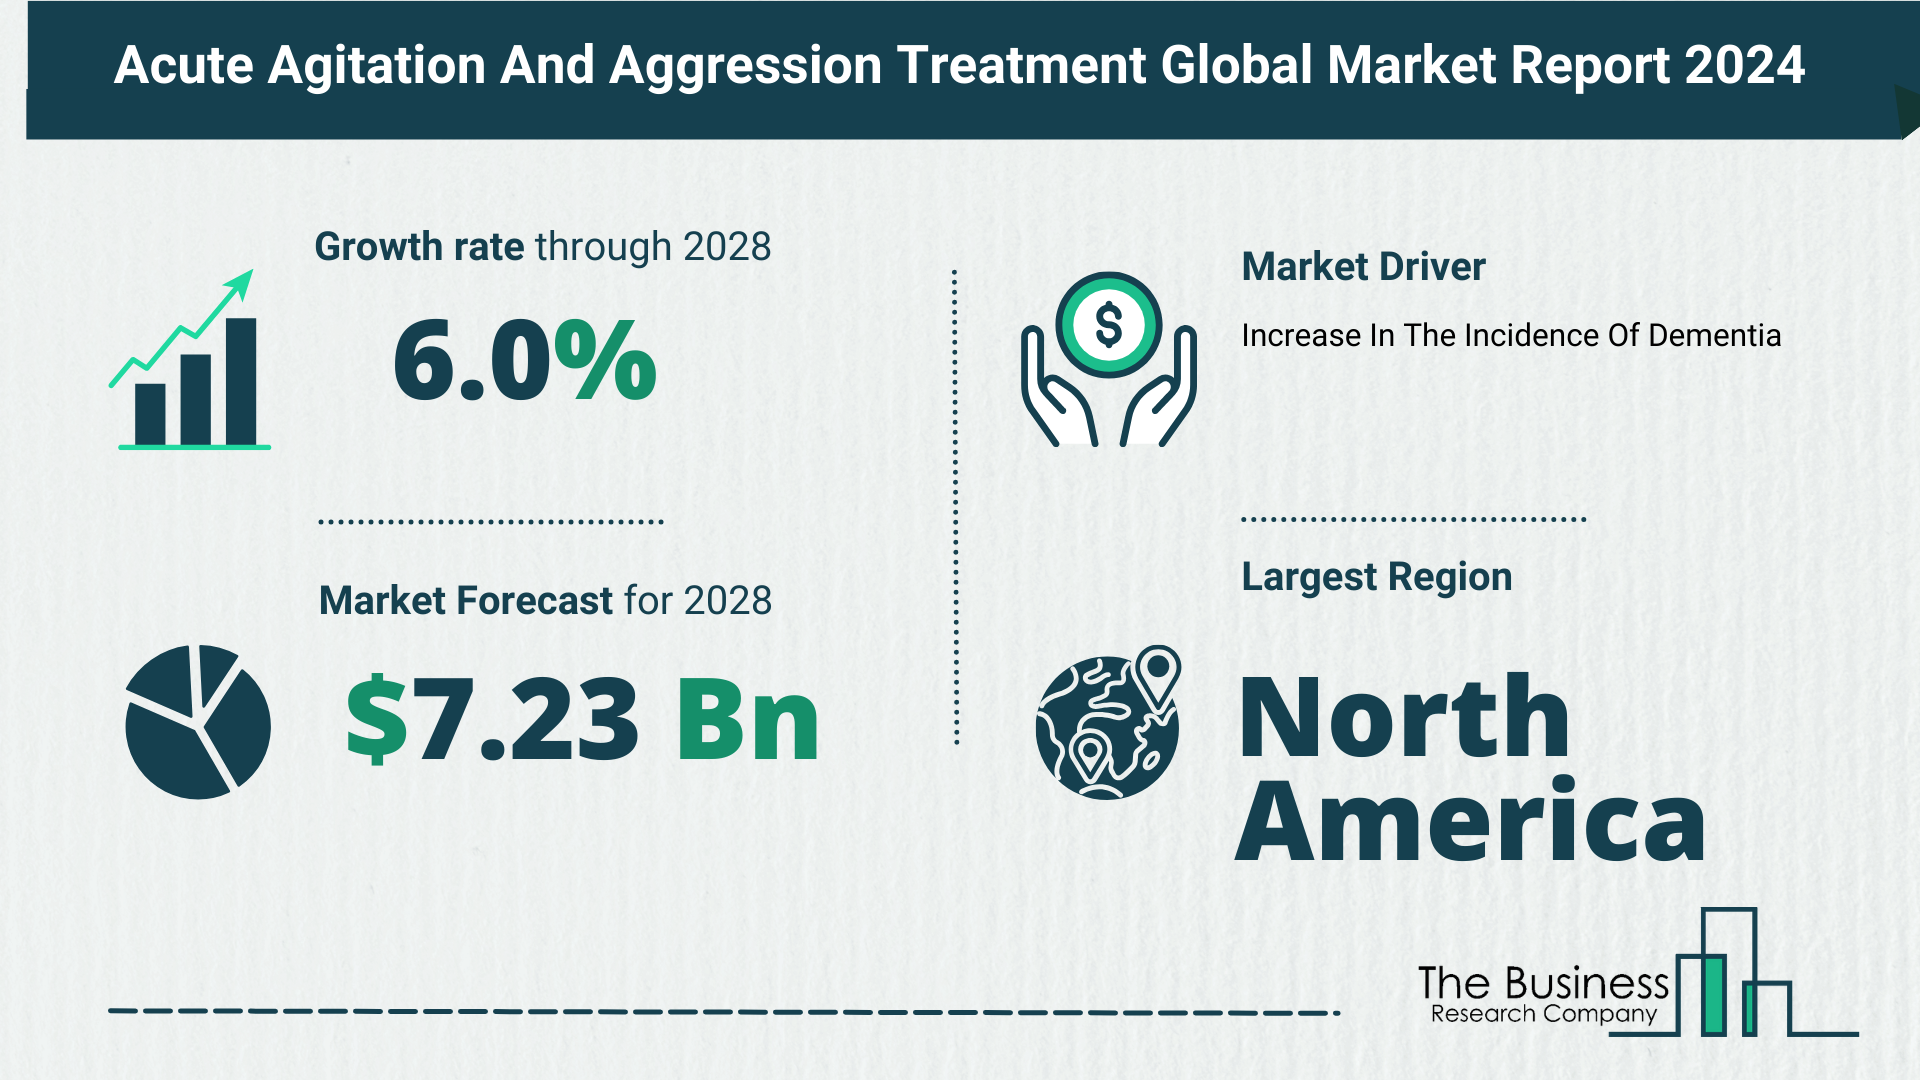 Global Acute Agitation And Aggression Treatment Market